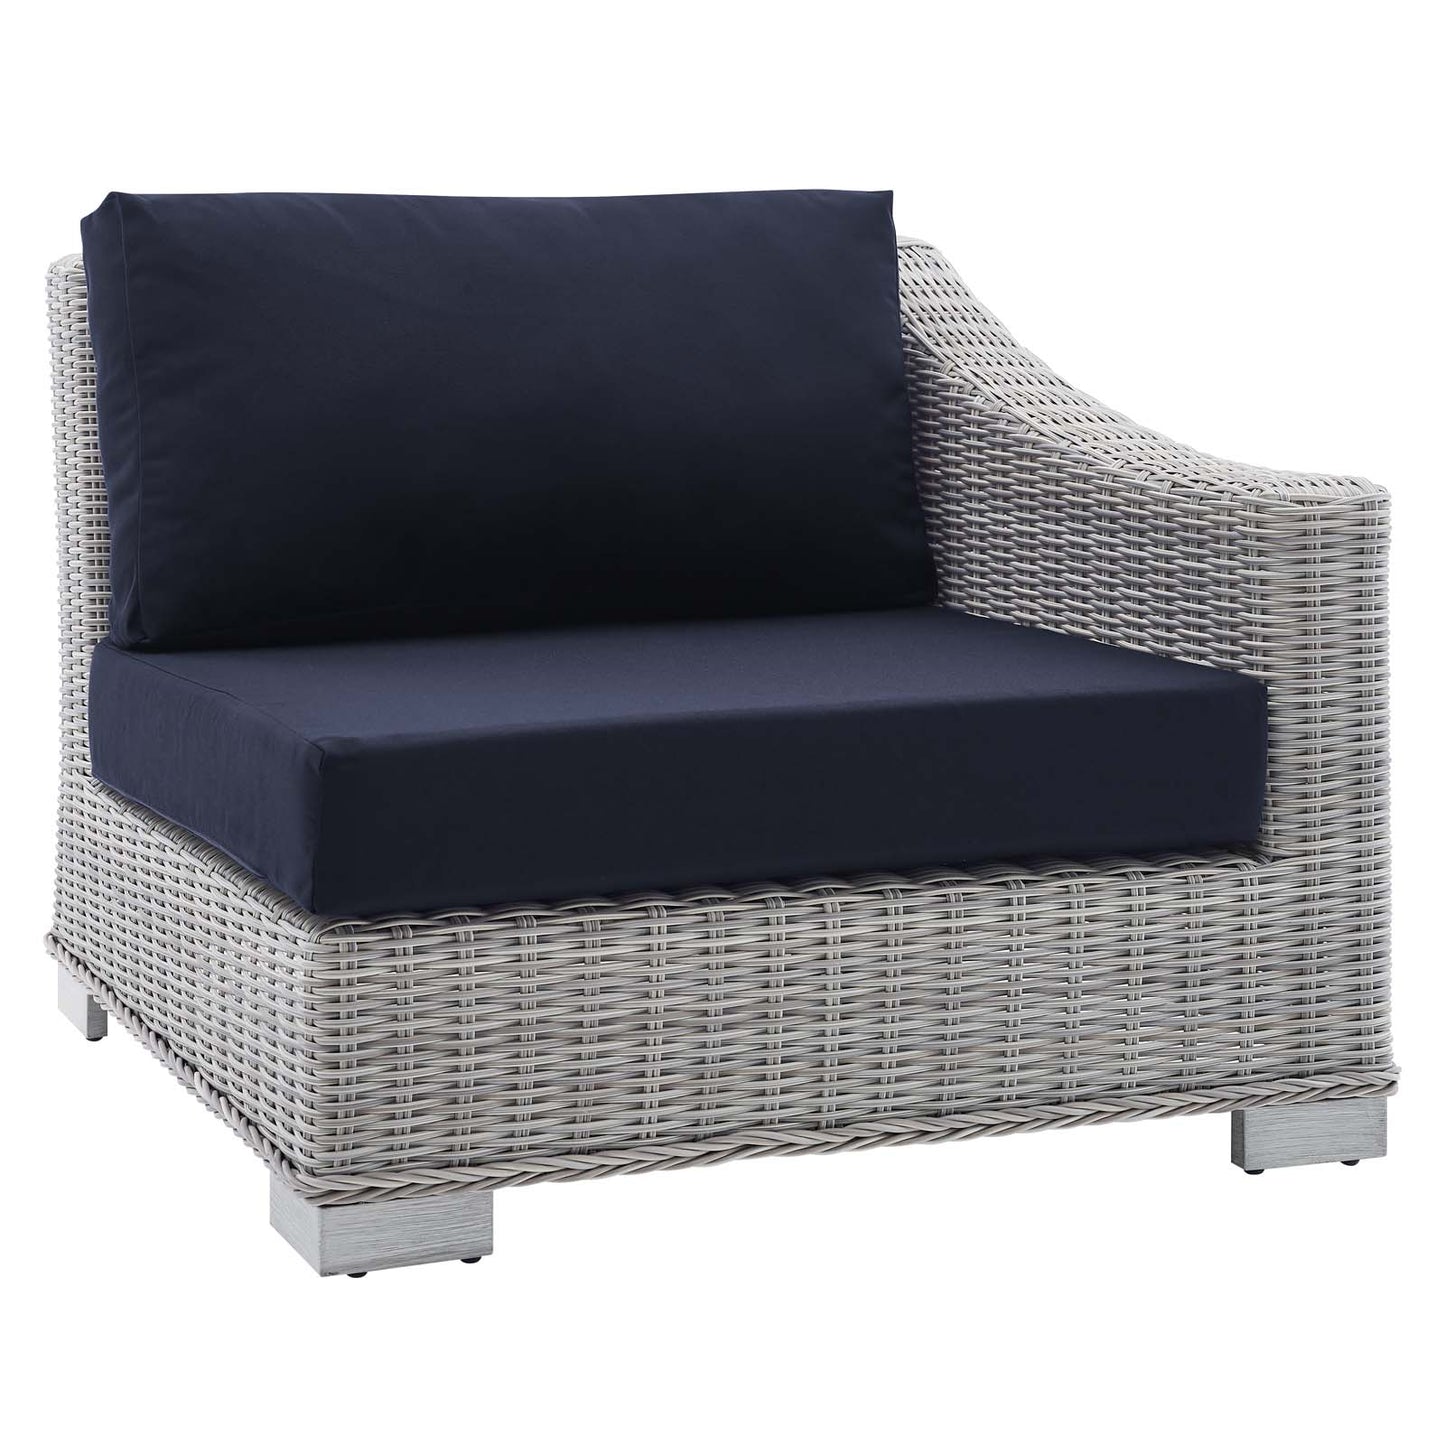 Conway Sunbrella® Outdoor Patio Wicker Rattan 6-Piece Sectional Sofa Set Light Gray Navy EEI-4358-LGR-NAV